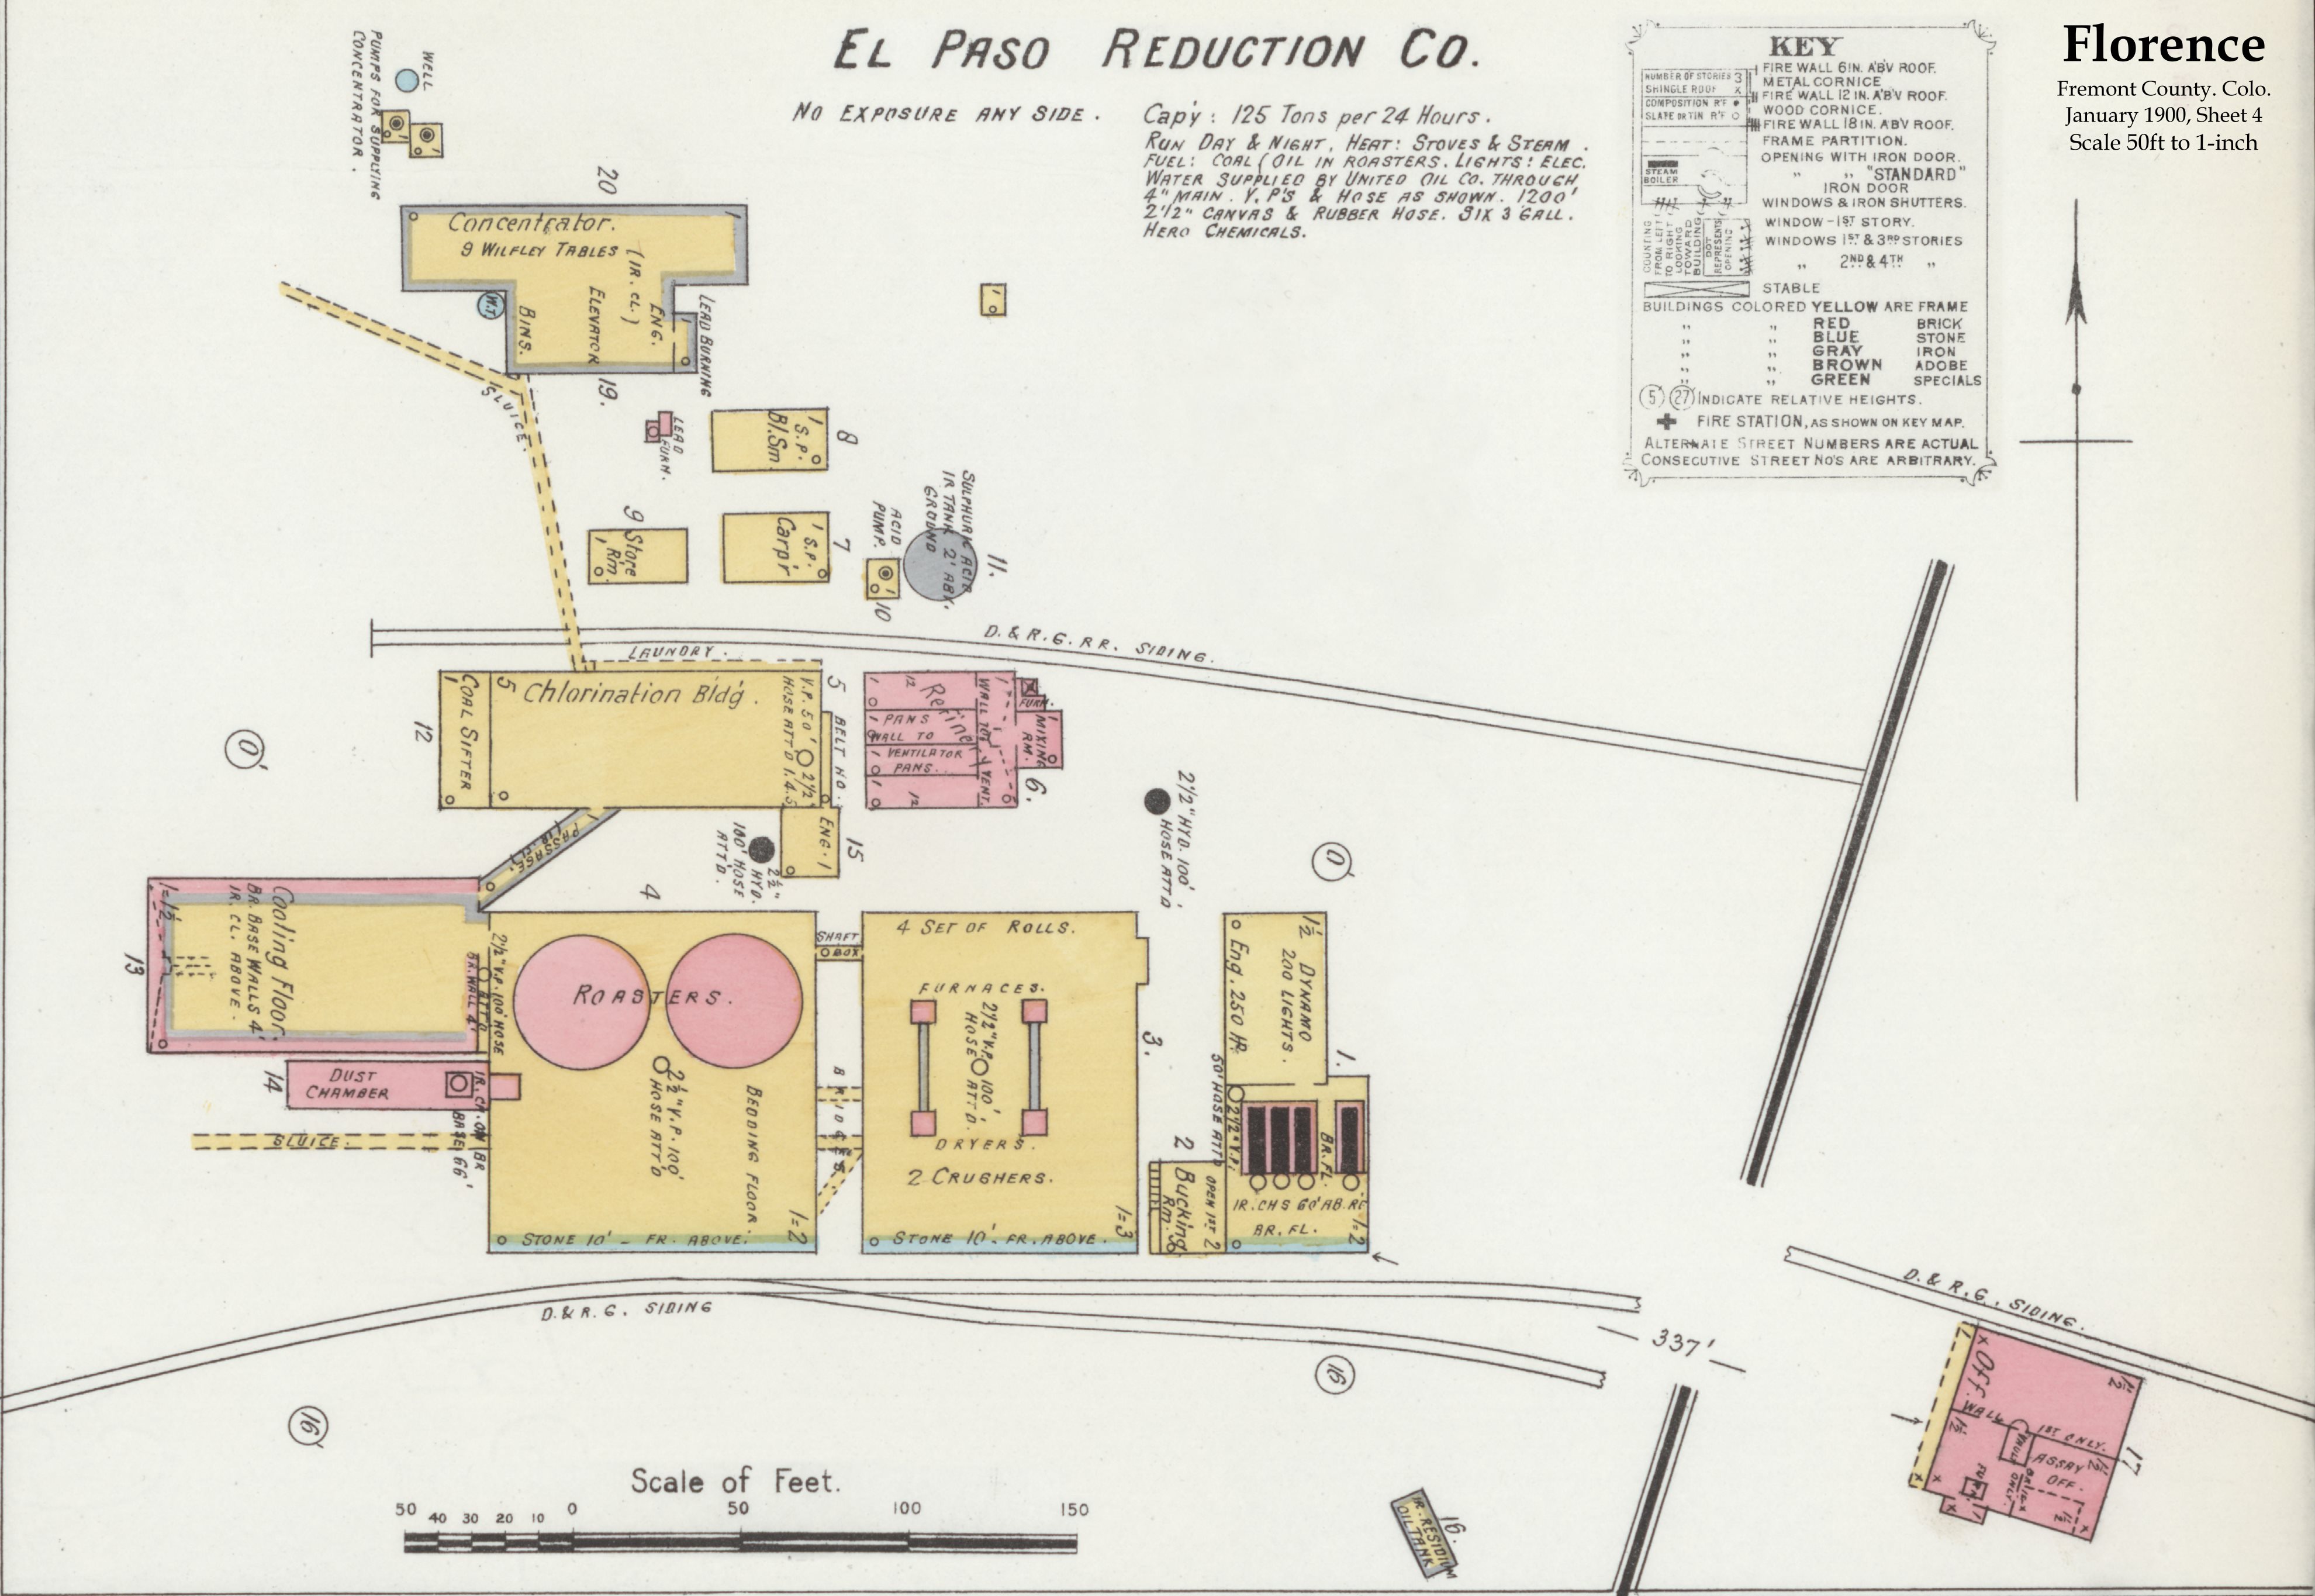 Sanborn Fire Insurance Map; El Paso Reduction Co. Works, Florence, Fremont County, Colo. Jan. 1900